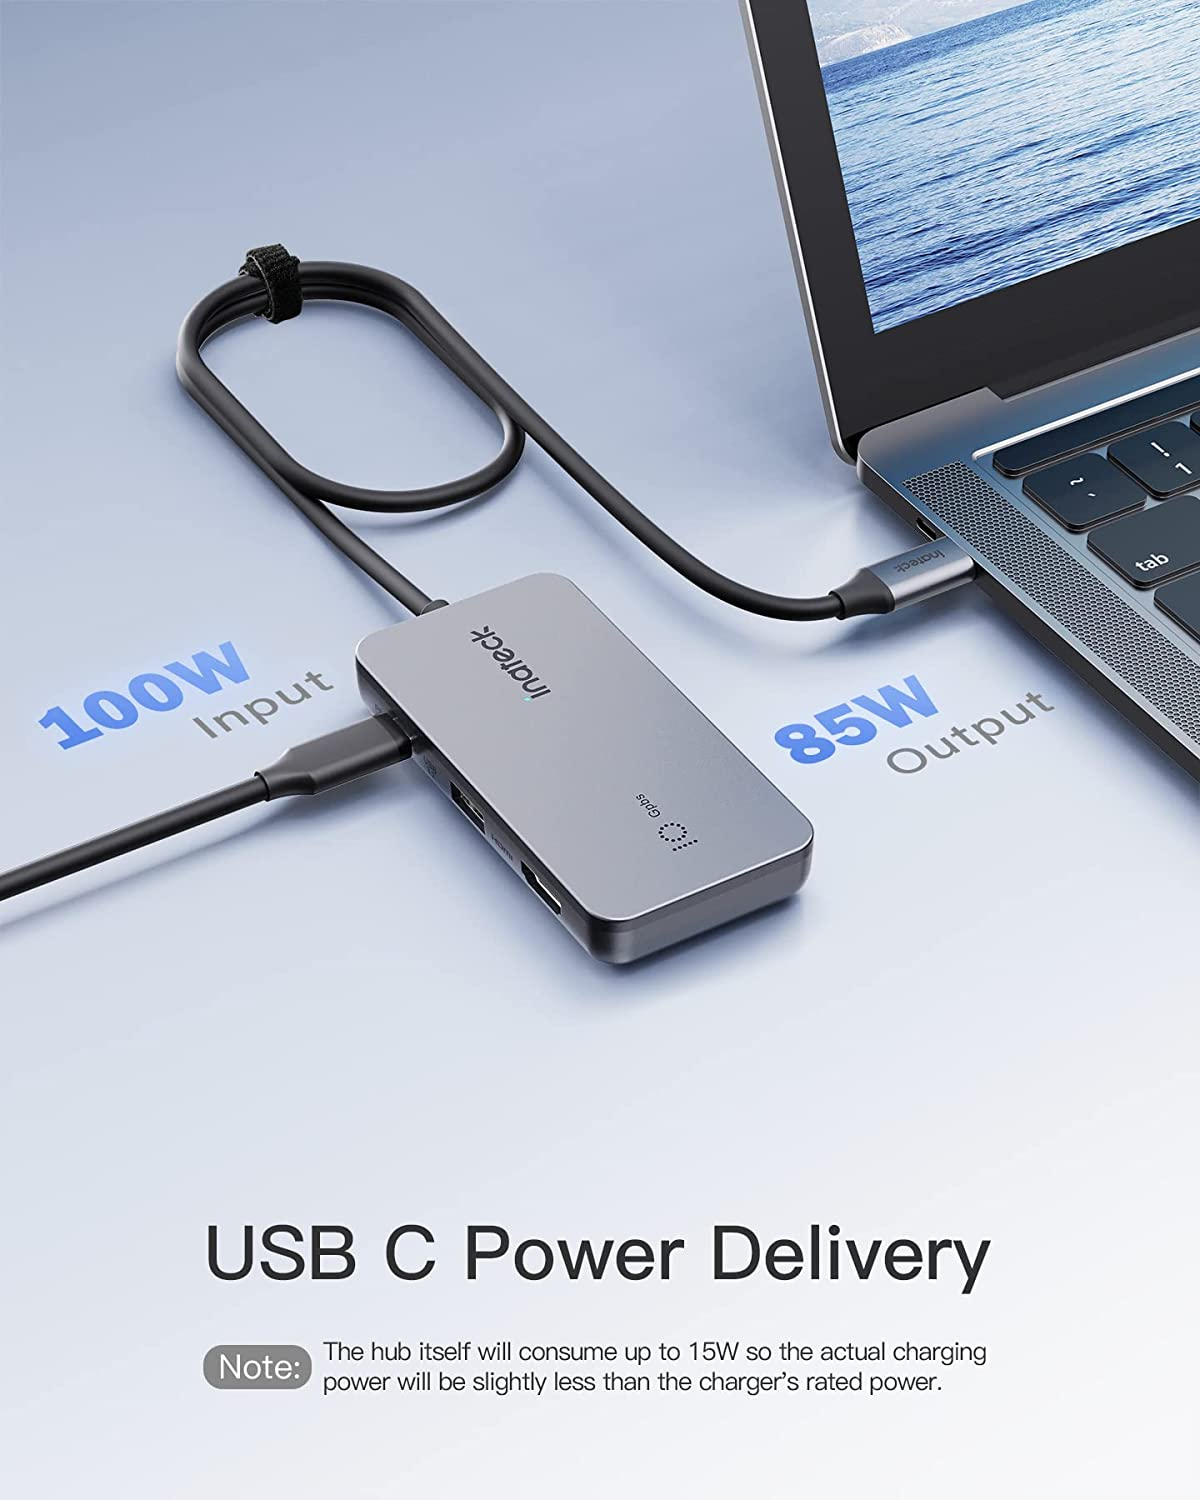 USB 7 Ports, Hub, 2 grau C Hub USB 50cm Geschwindigkeit, Kable, INATECK 3.2 mit Gen